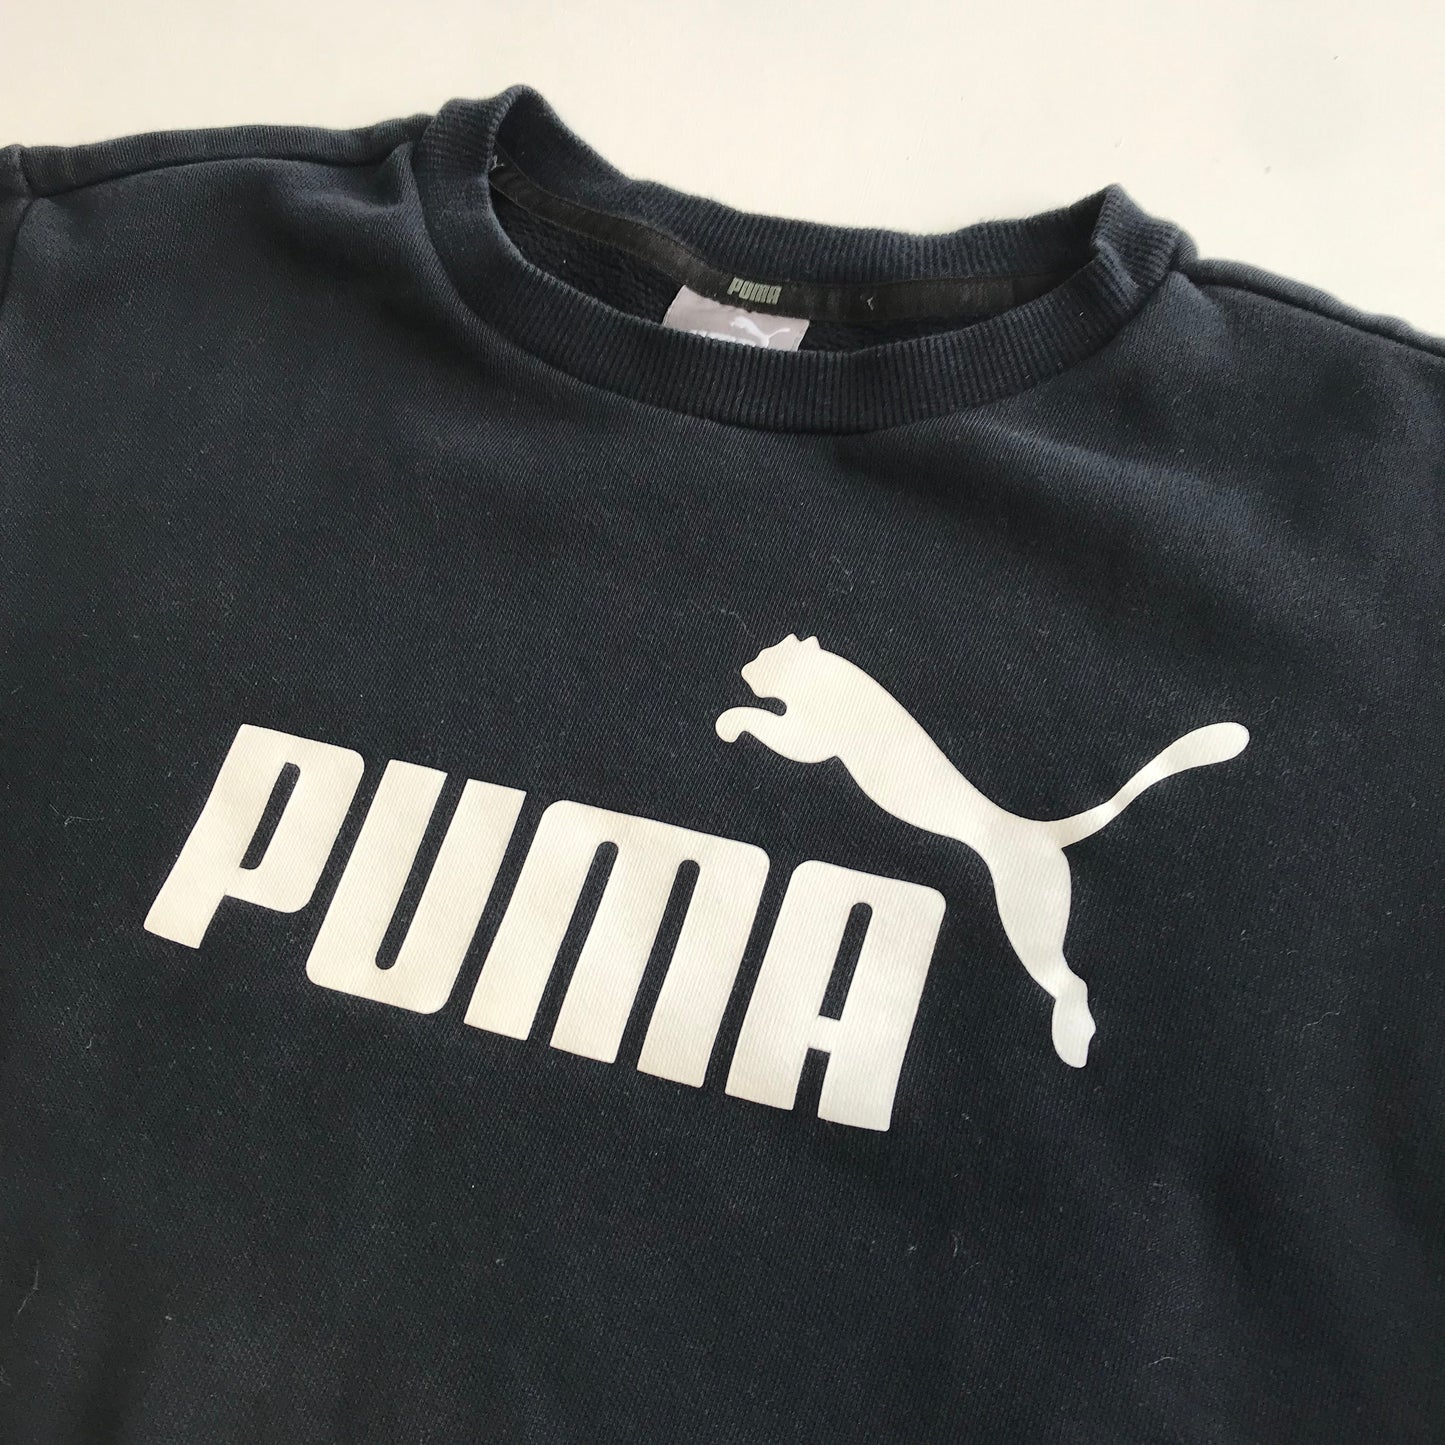 PUMA Black Sweatshirt Age 12